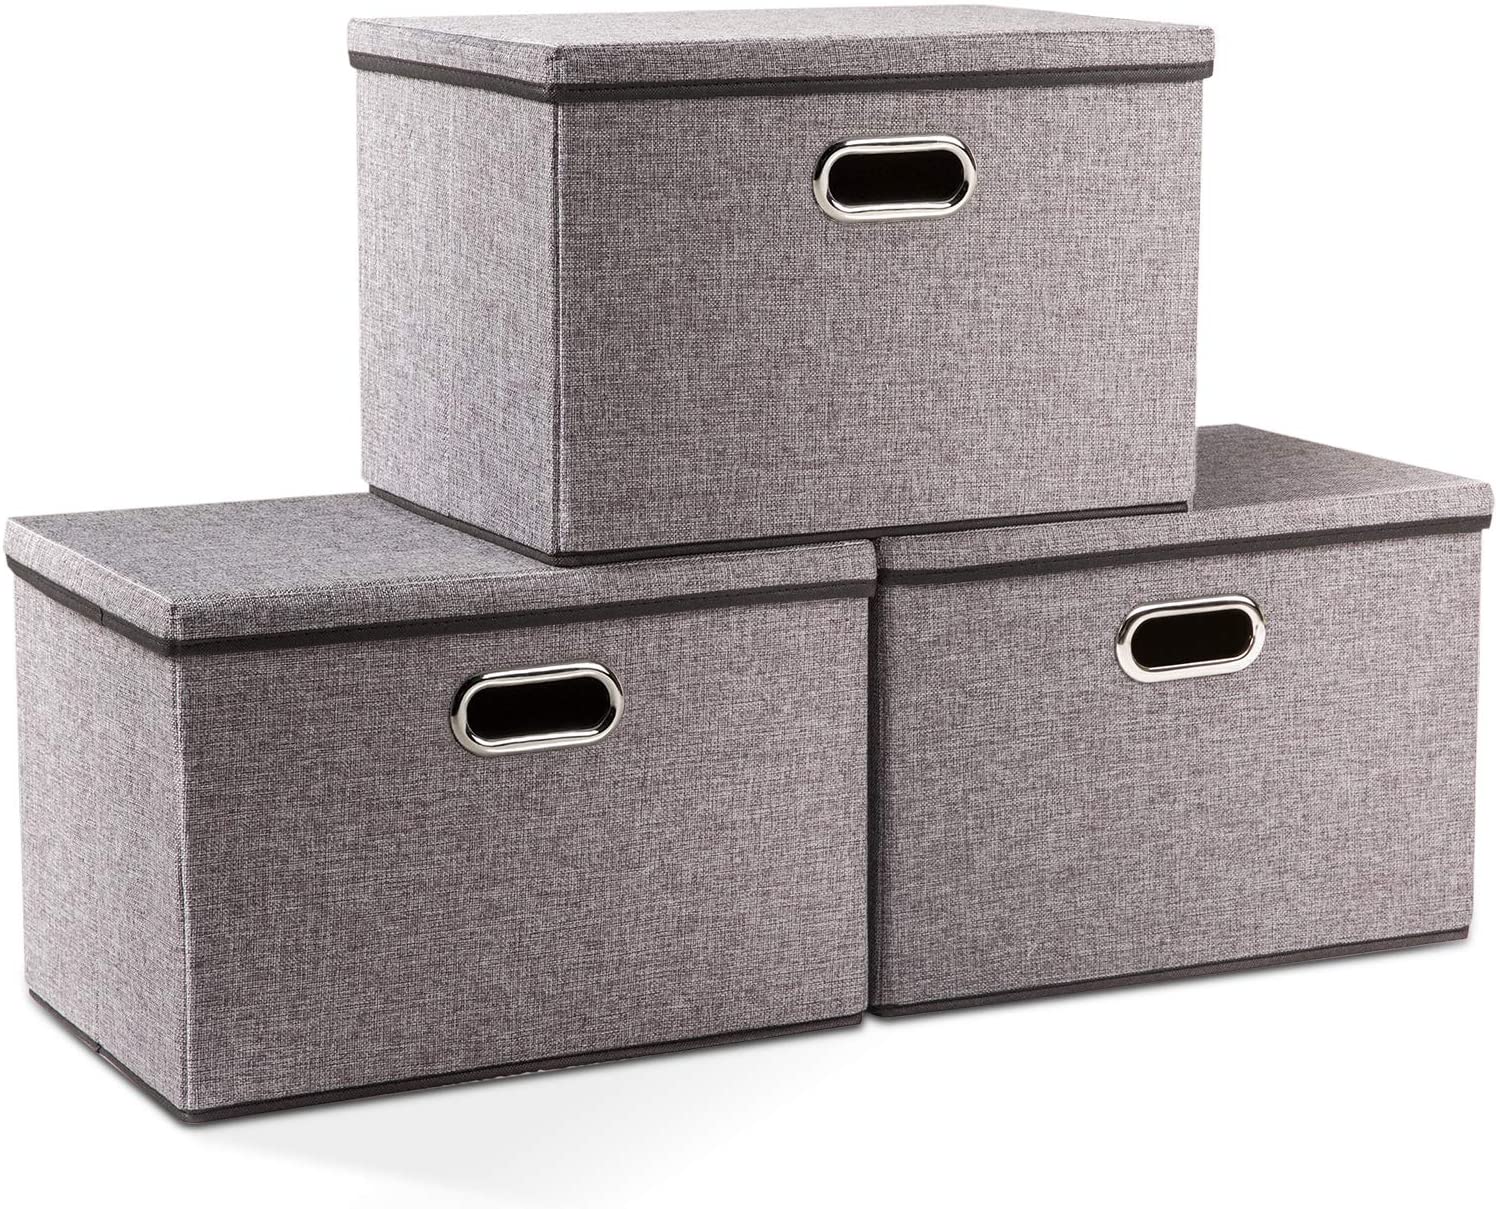 Prandom Eco-Friendly Linen Storage Containers, 3-Pack